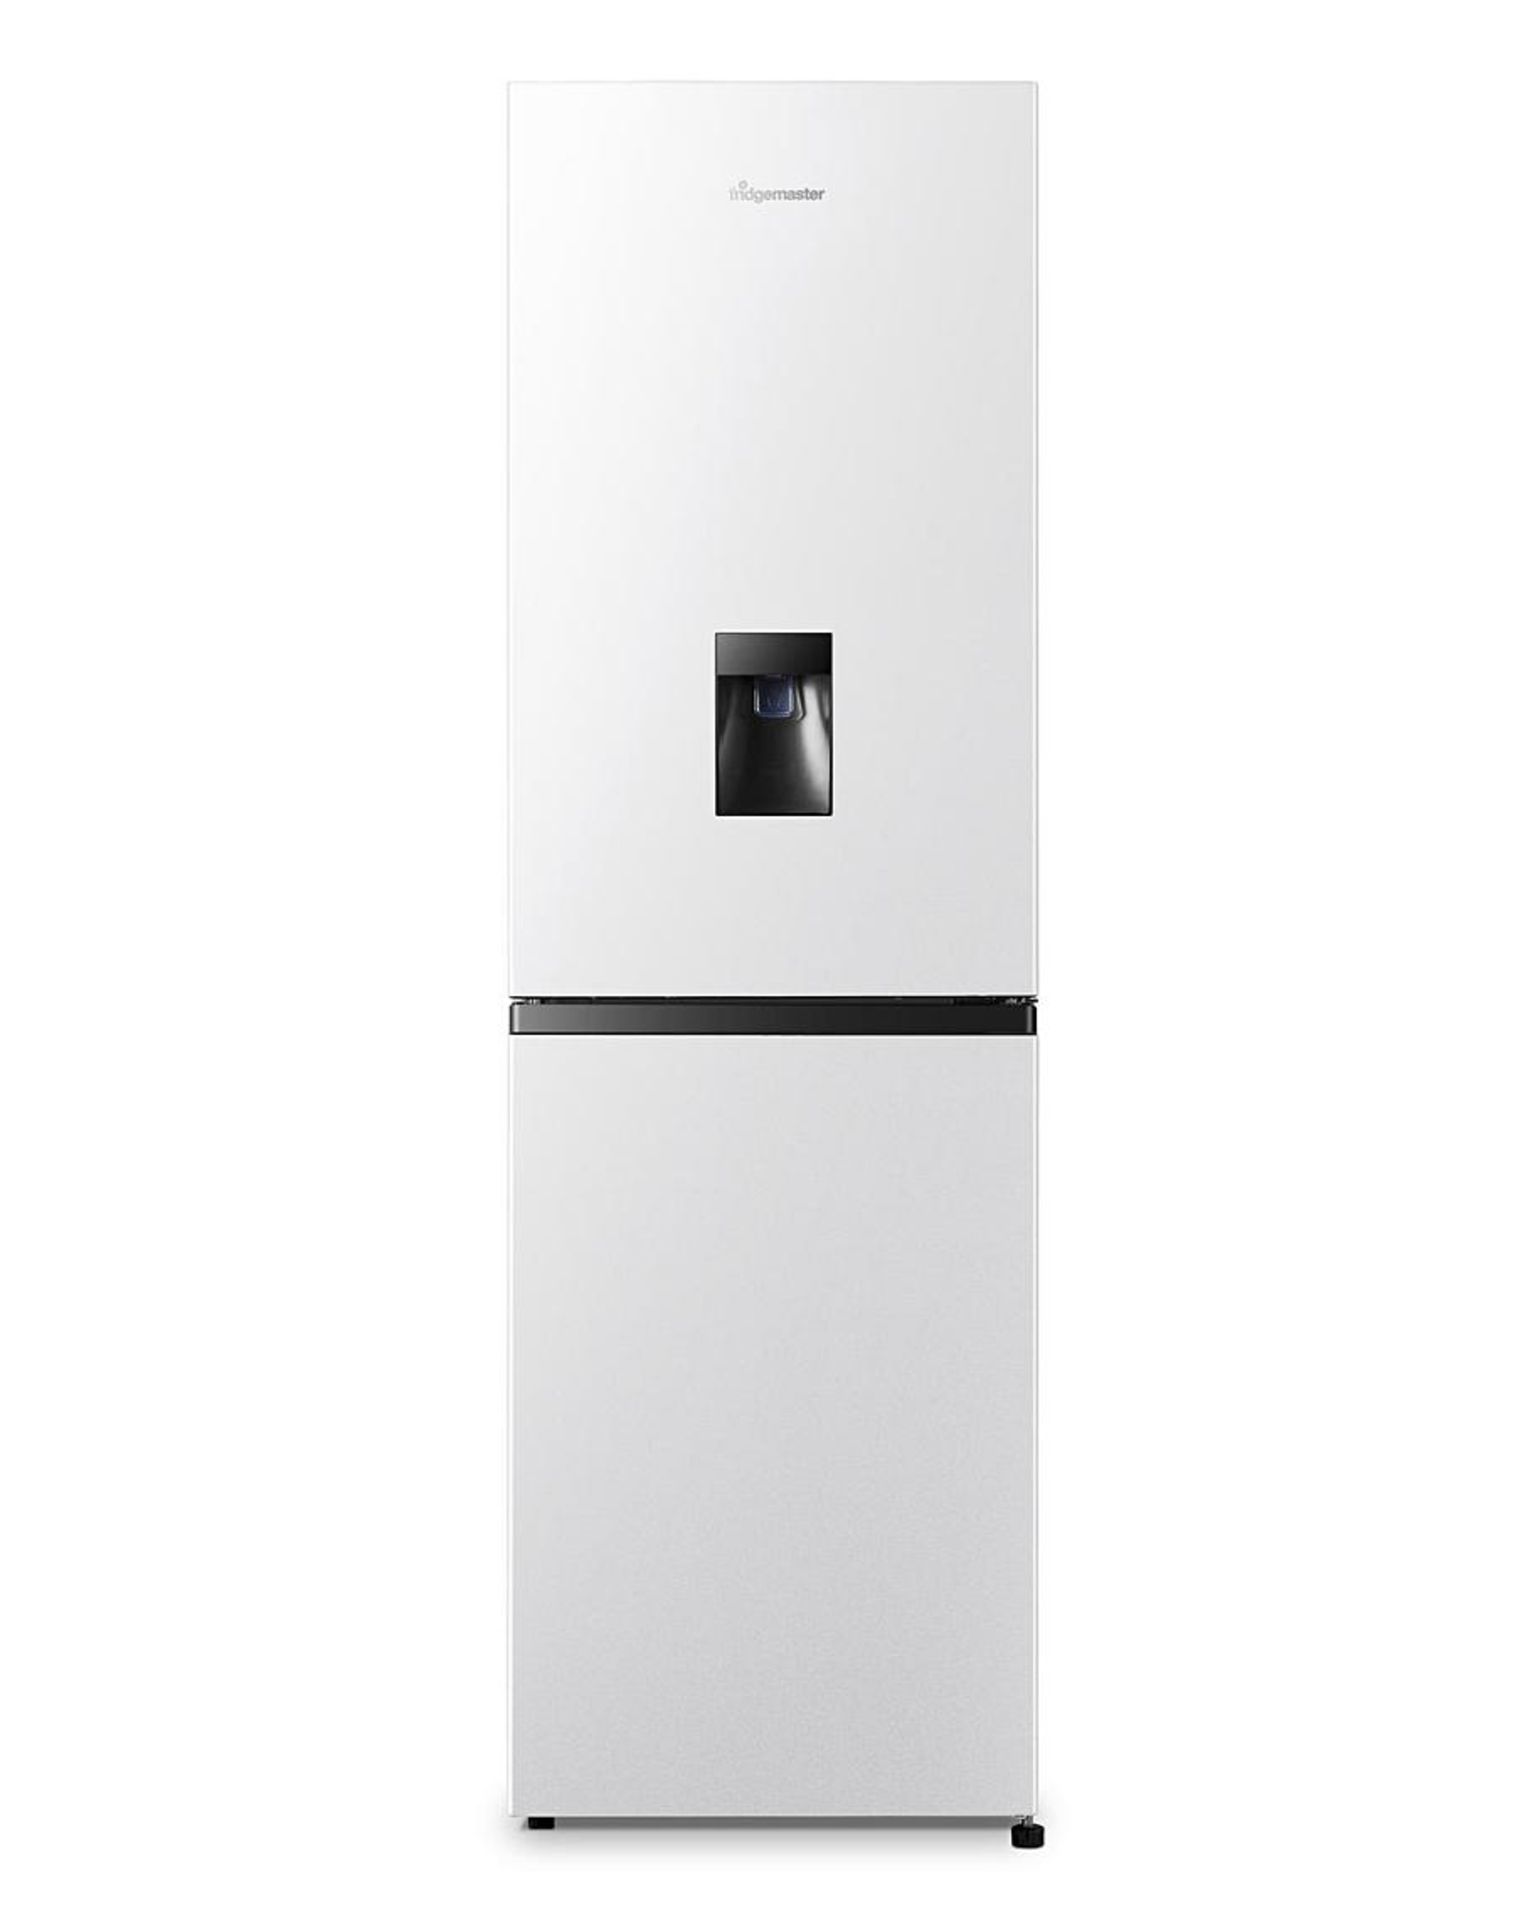 Fridgemaster MC55240MDF Fridge Freezer with Water Dispenser - White. - SR3. With a 240 litre